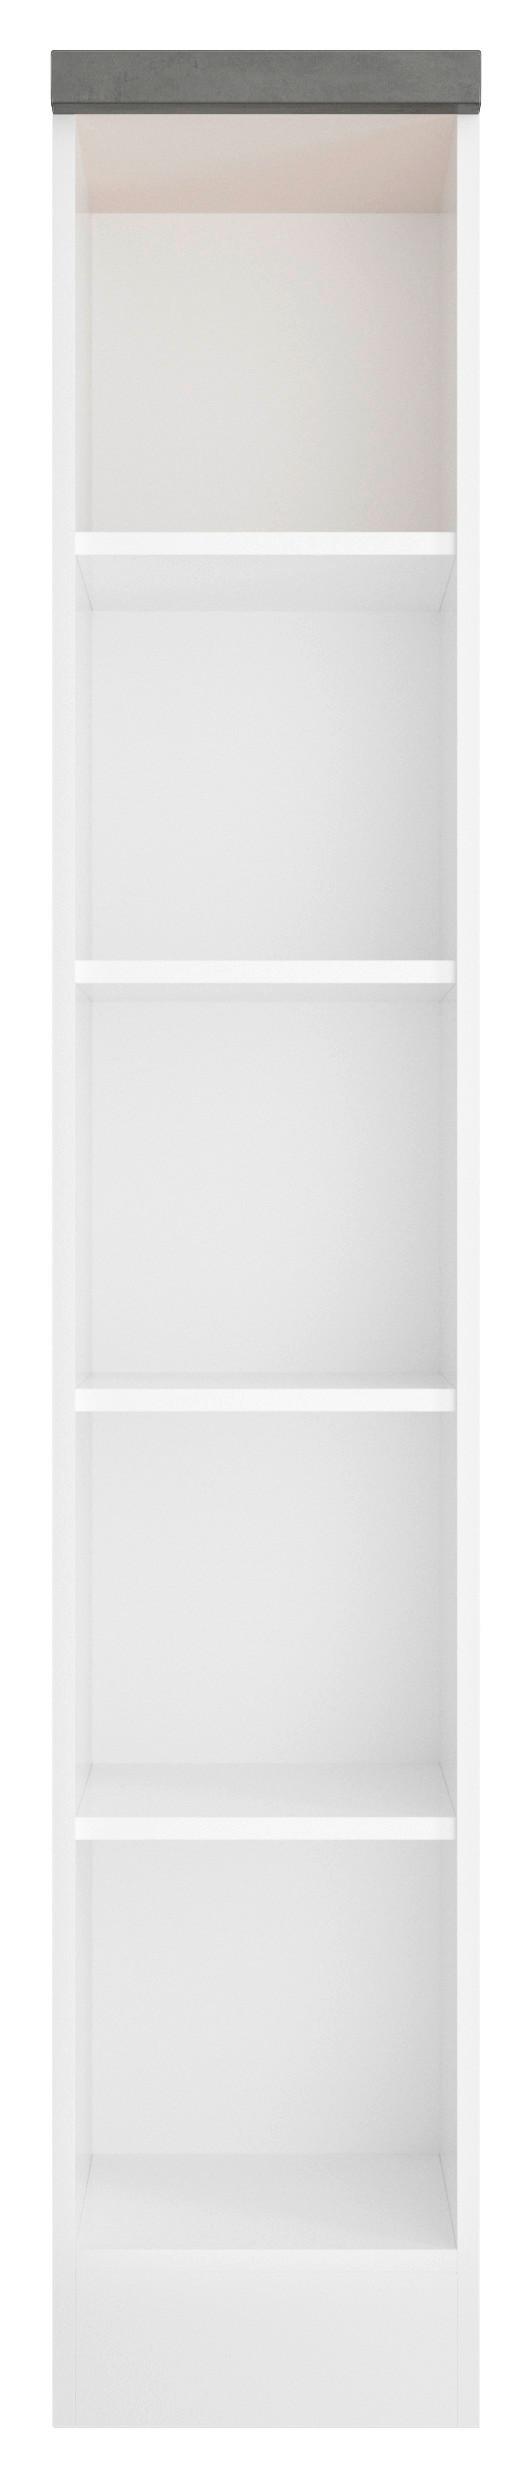 Regal Monza B: 30 cm Weiß/Grau - Weiß/Grau, LIFESTYLE, Holzwerkstoff (30/166/60cm) - Held